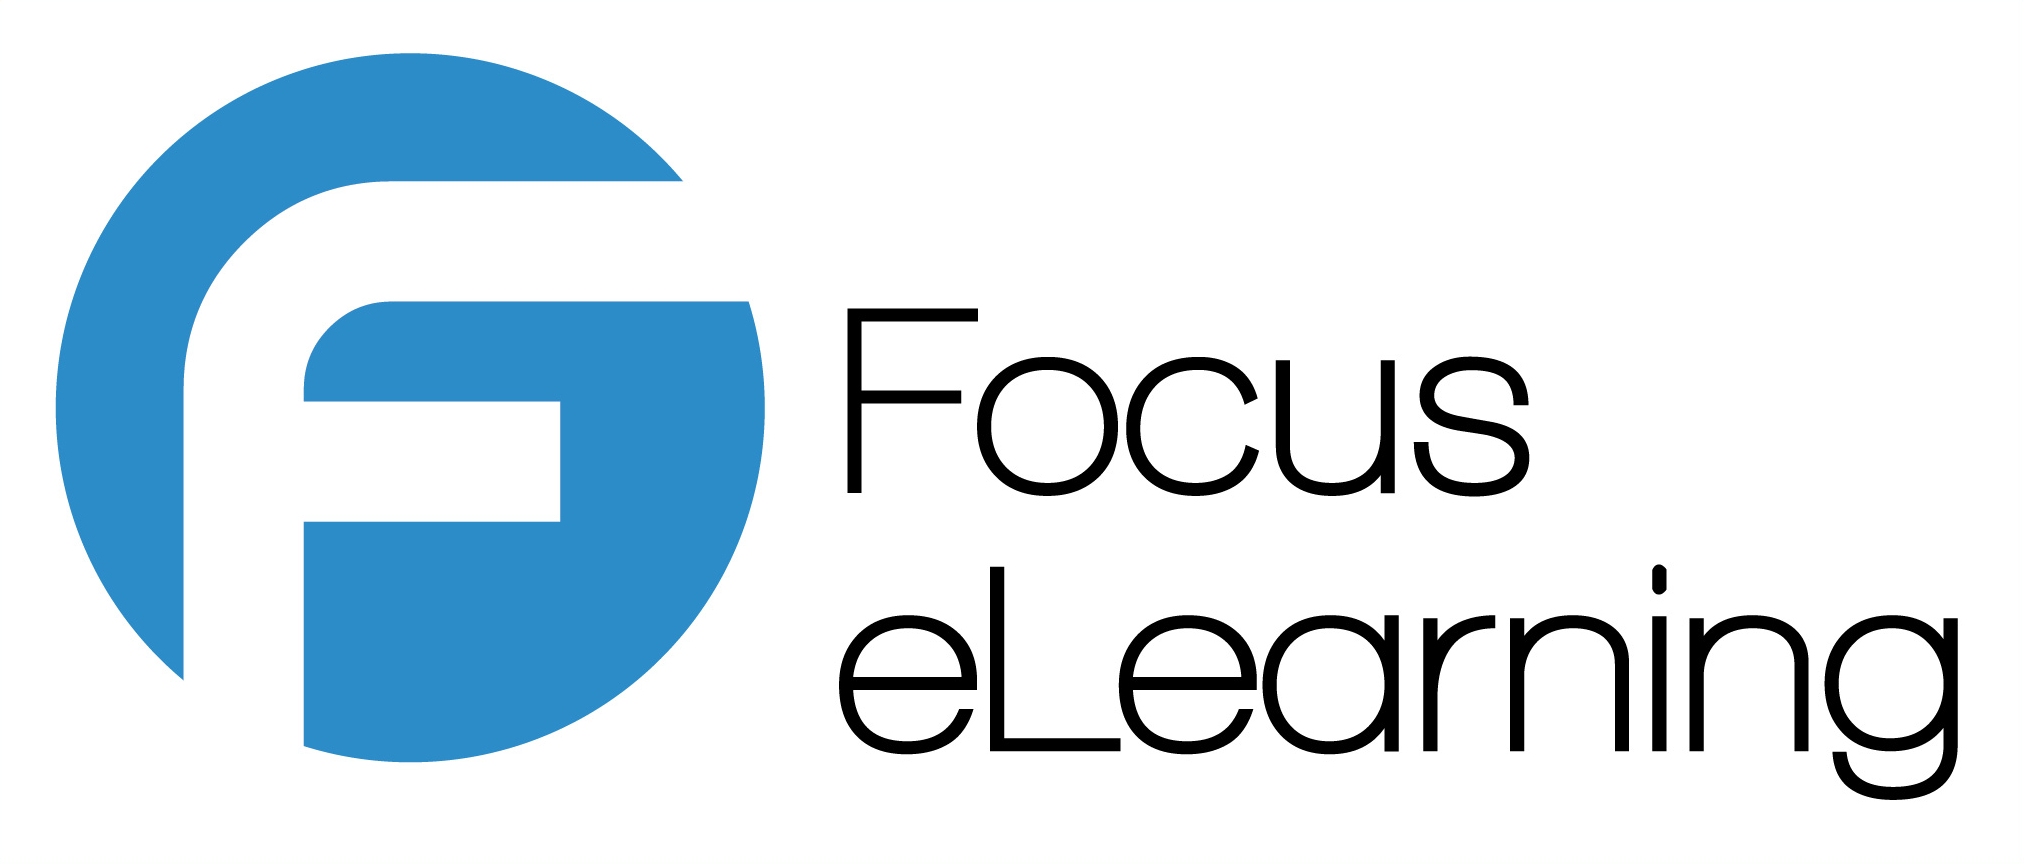 Focus eLearning